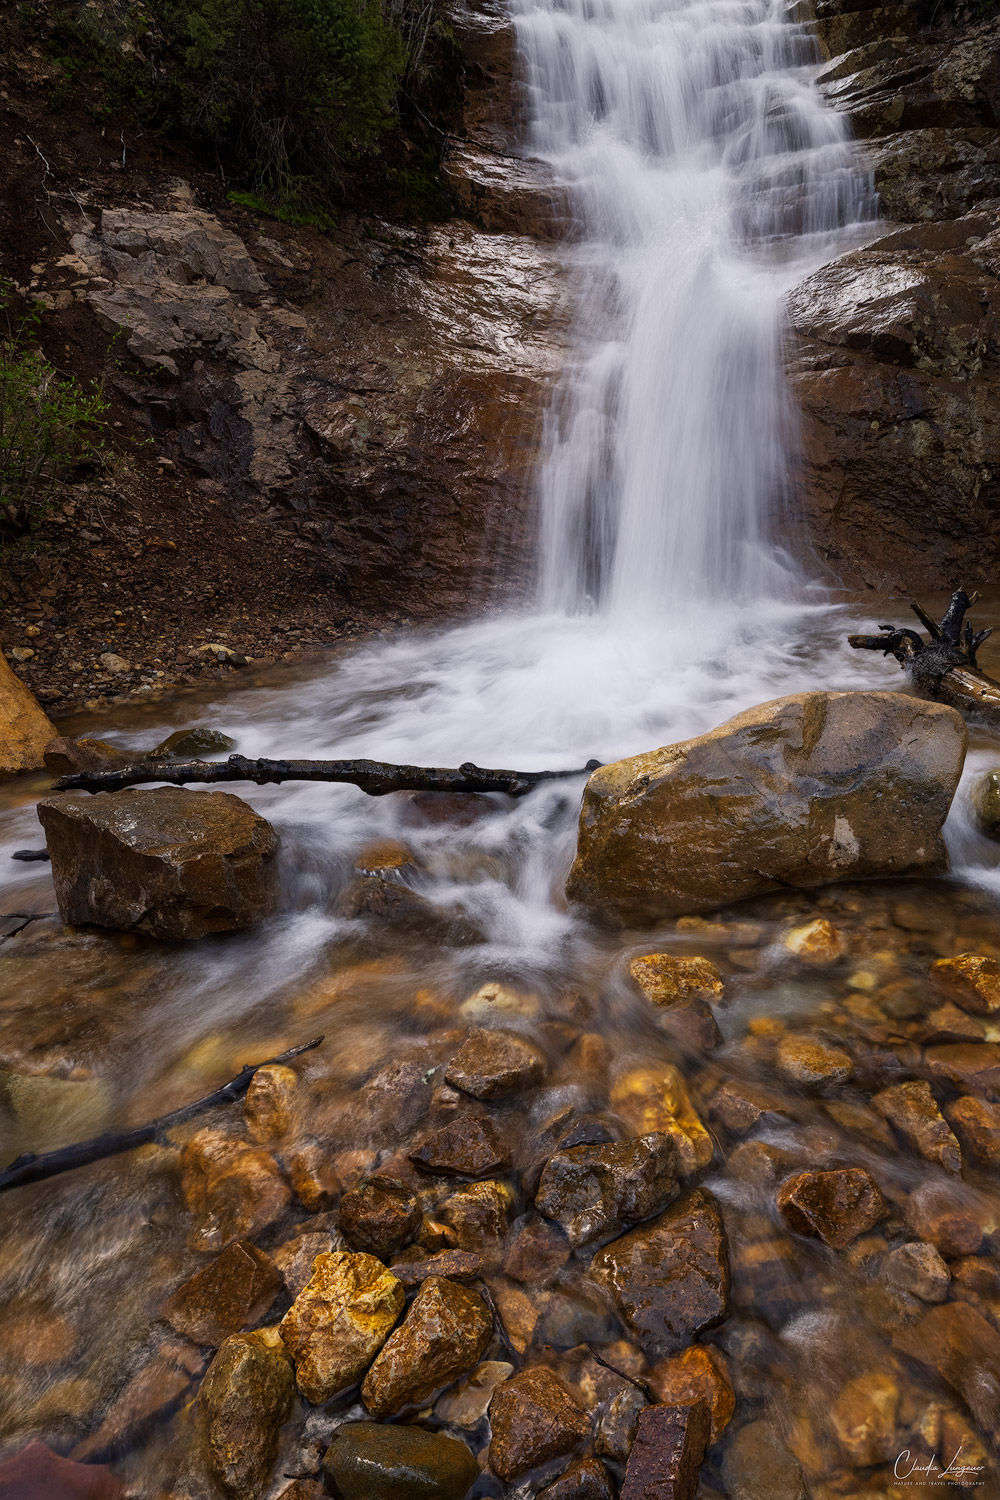 Waterfall near the Million Dollar Highway in Colorado.